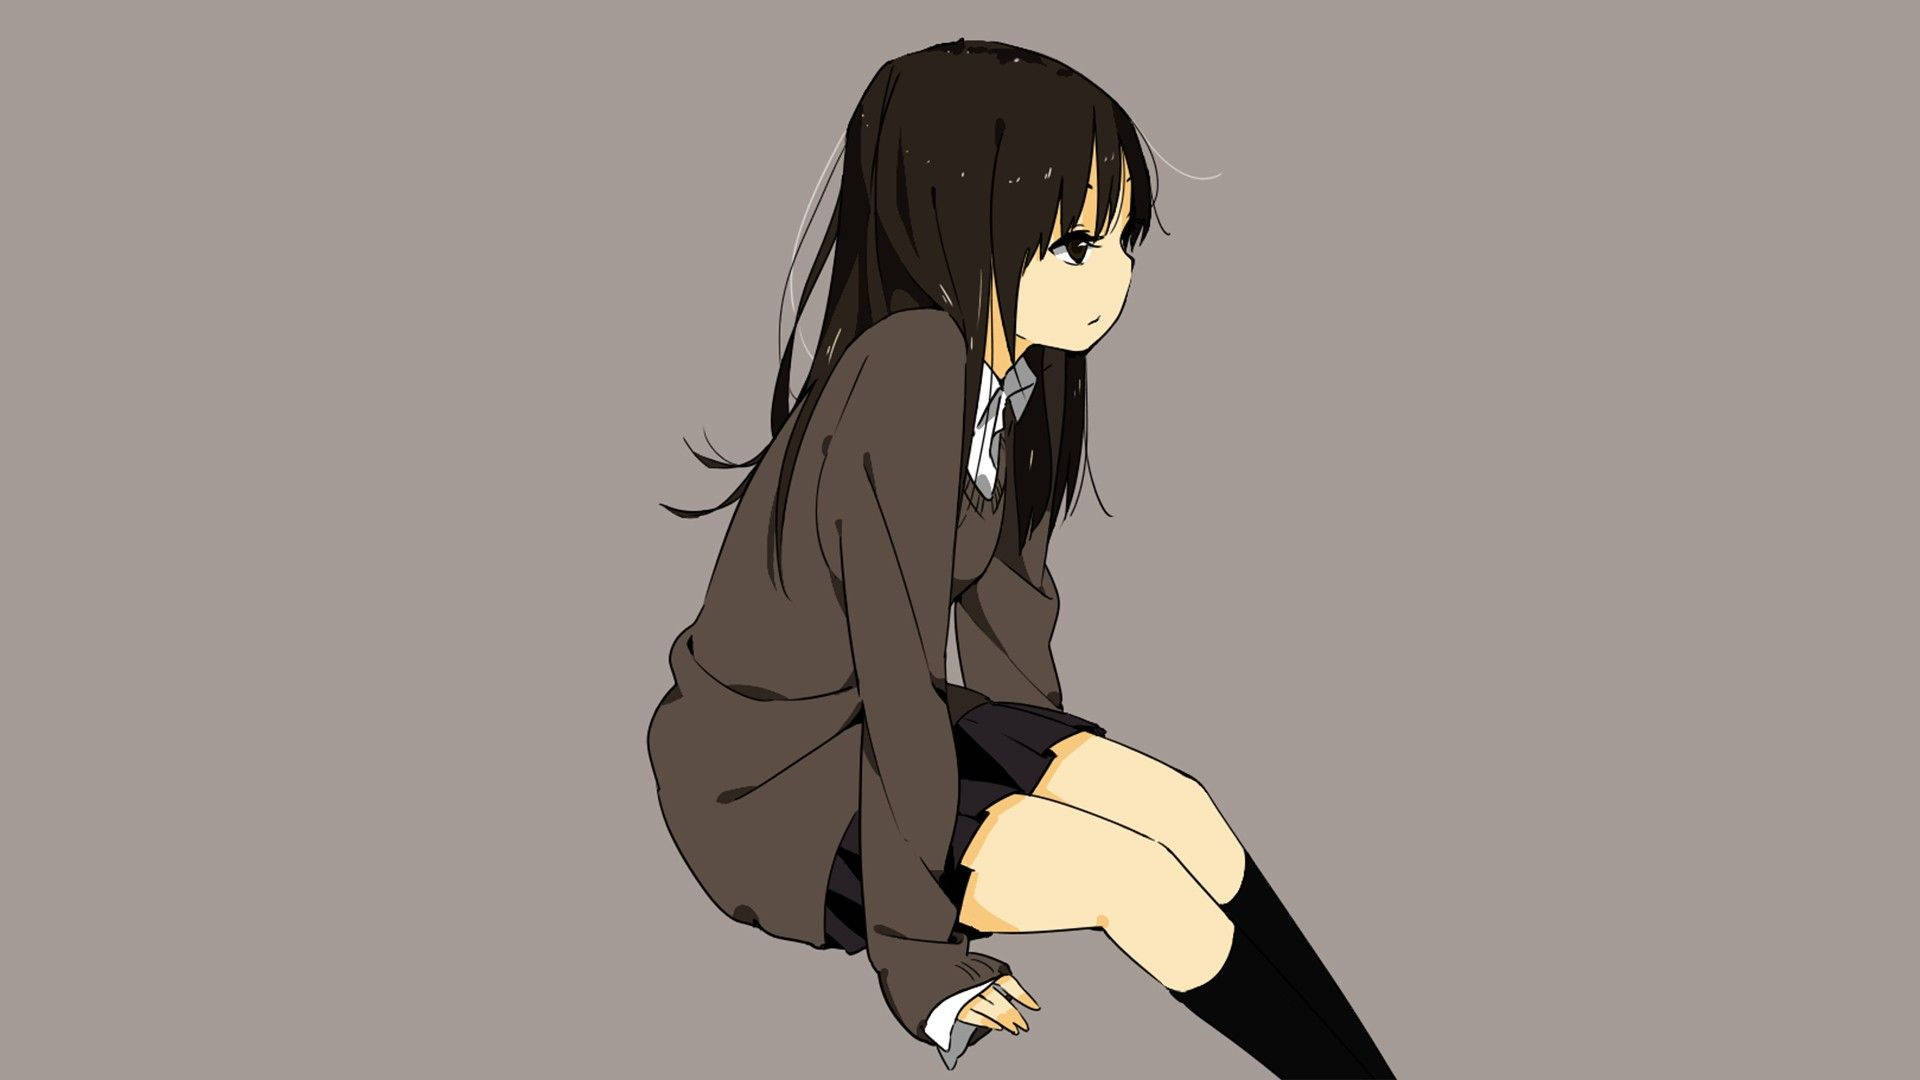 Sad Anime Girl In Uniform Aesthetic Wallpaper